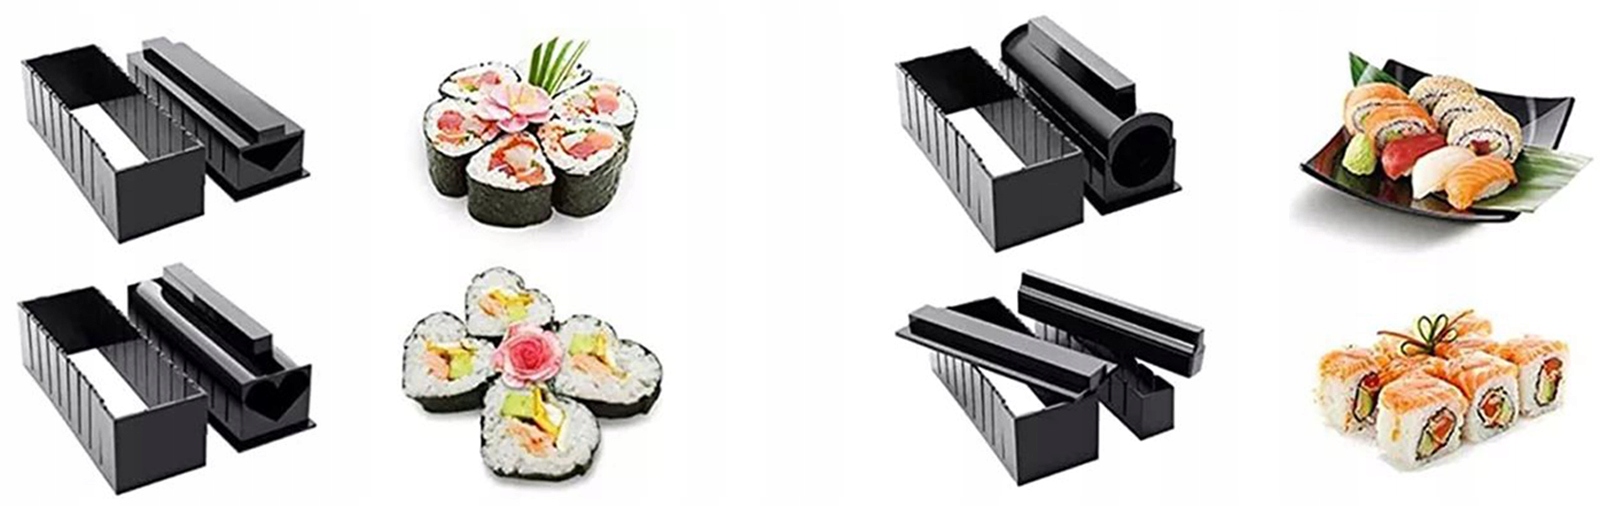 ZESTAW 10 FOREMEK DO SUSHI FORMA DO SUSHI KOMPLET Rodzaj zestaw do sushi